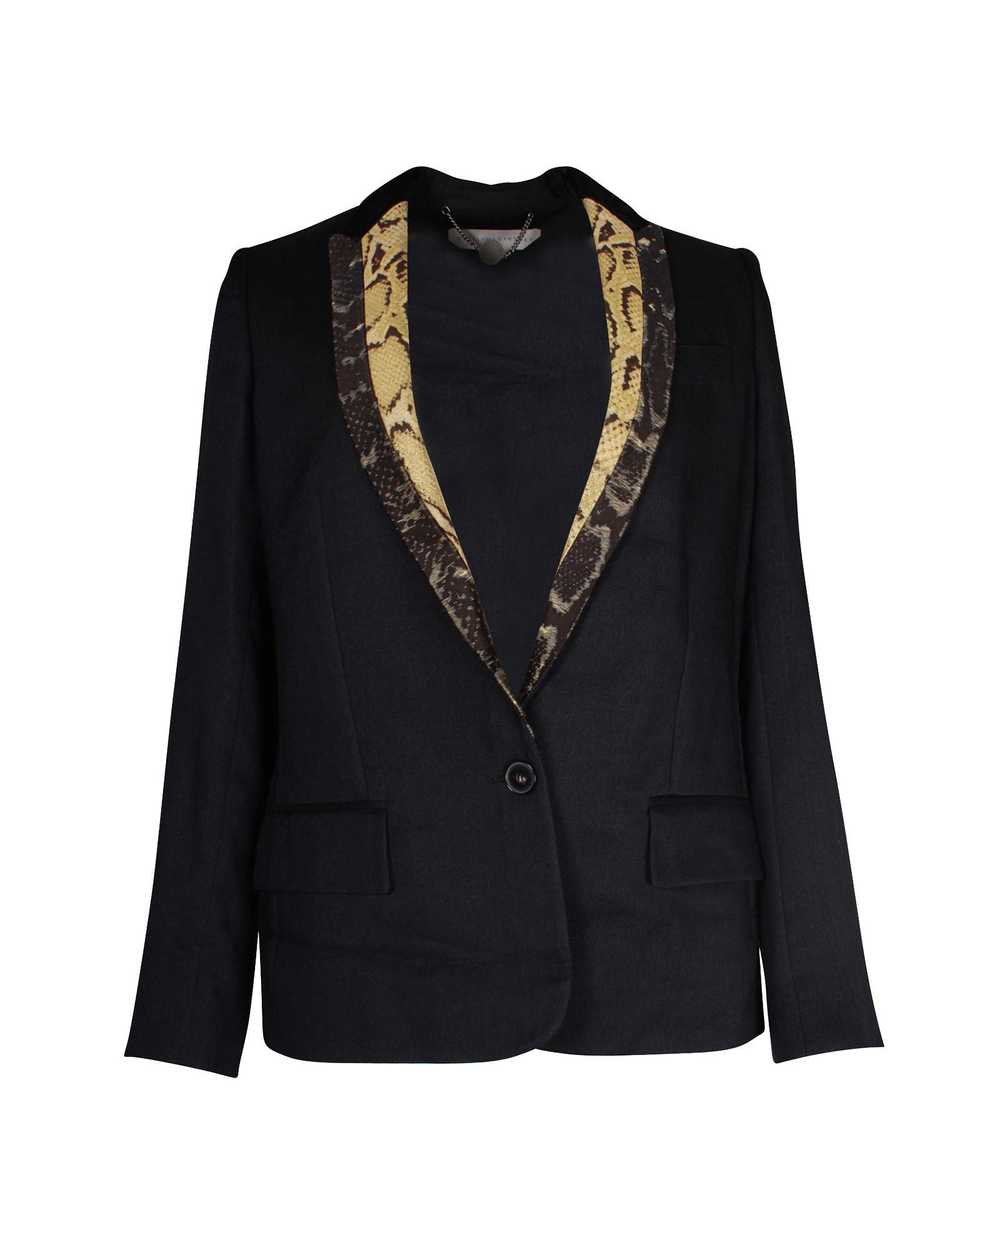 Stella McCartney Jacquard Collar Wool Blazer - image 1